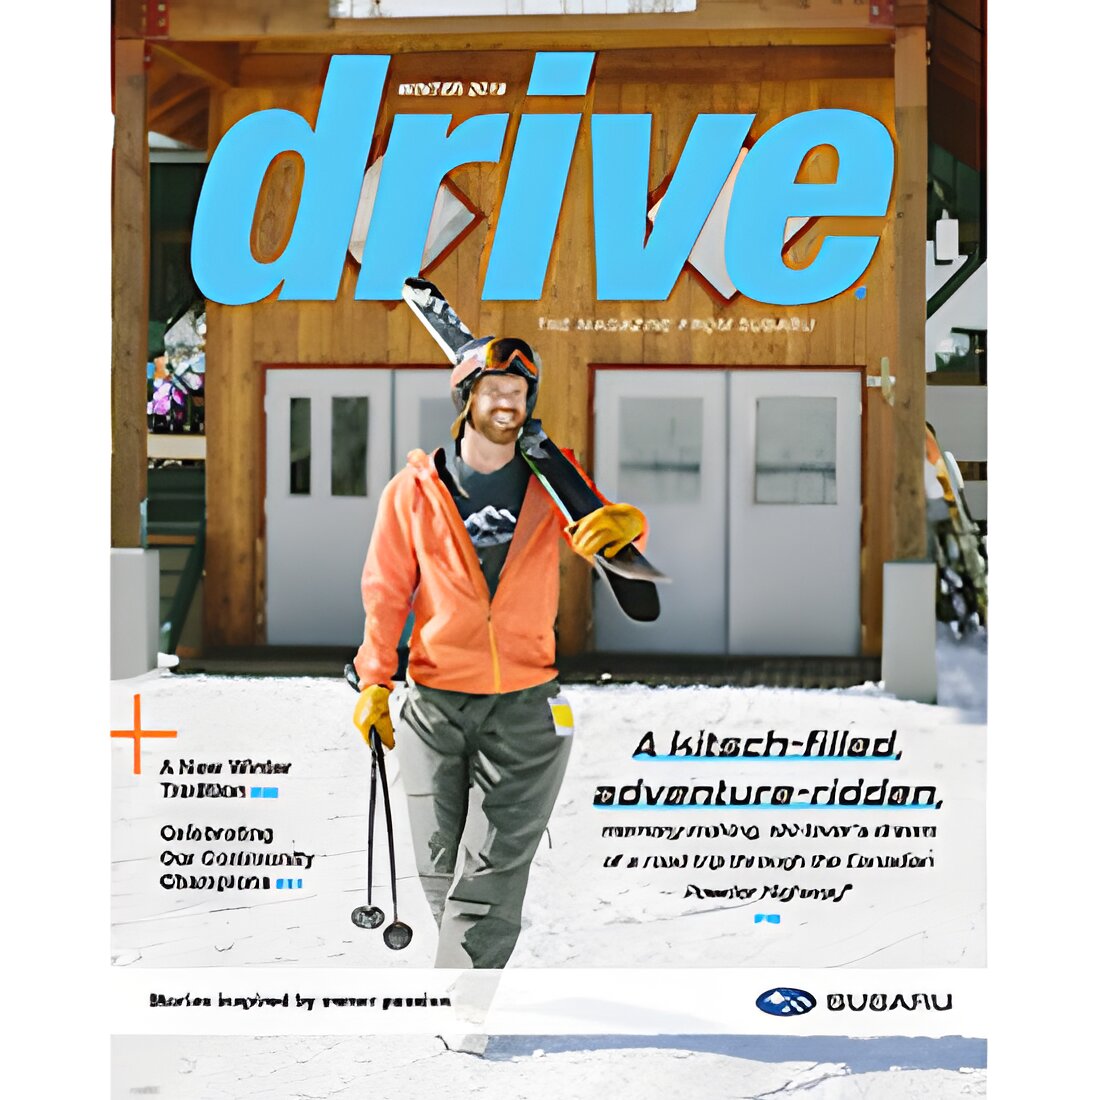 Free Print Copy Of Subaru Drive Magazine